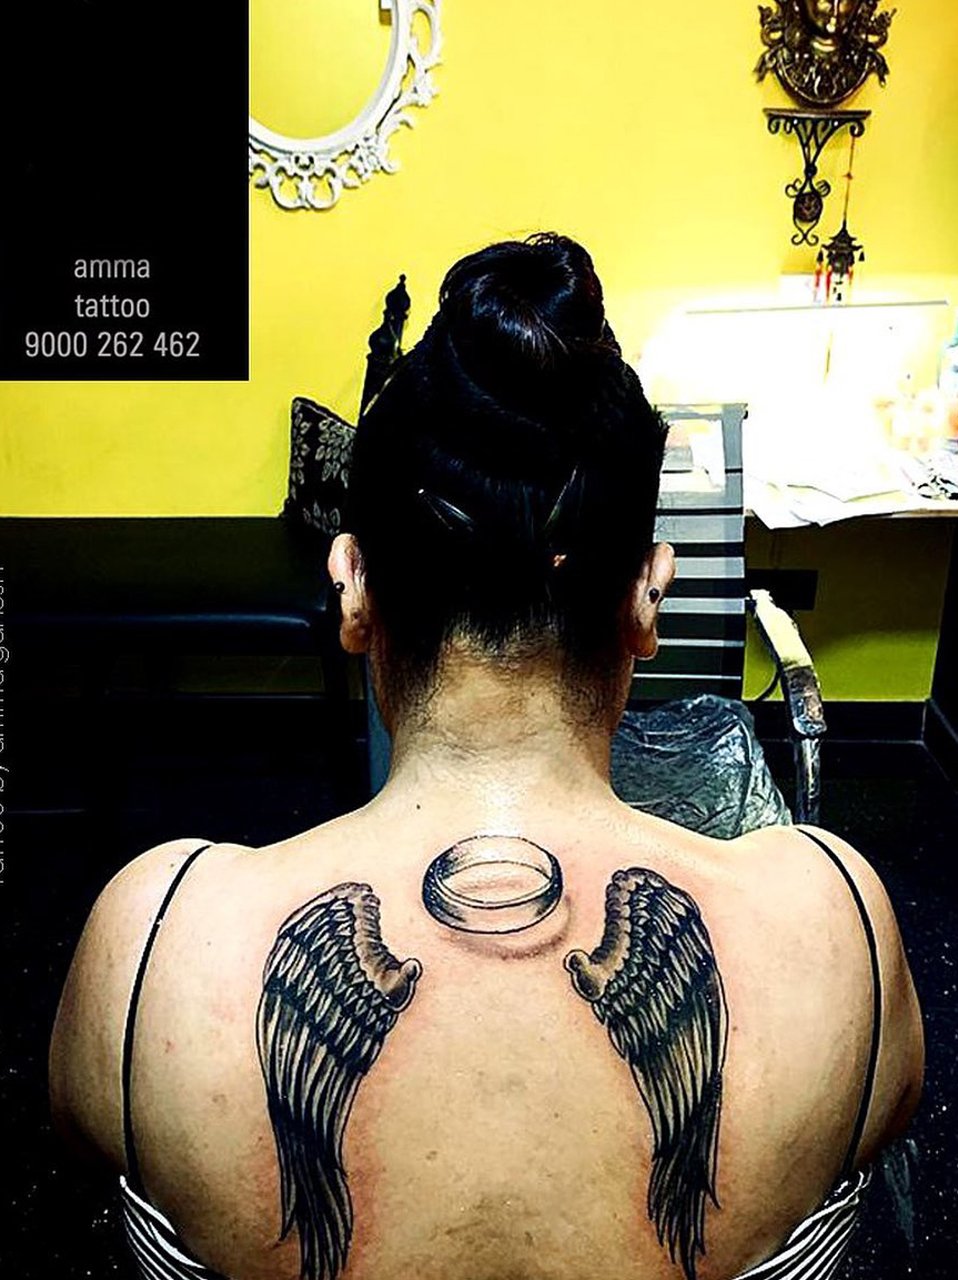 Karma Tattoo  Amma appa tattoos done by Karthik karma tattoo ink   piercing ph  9894566562  Facebook